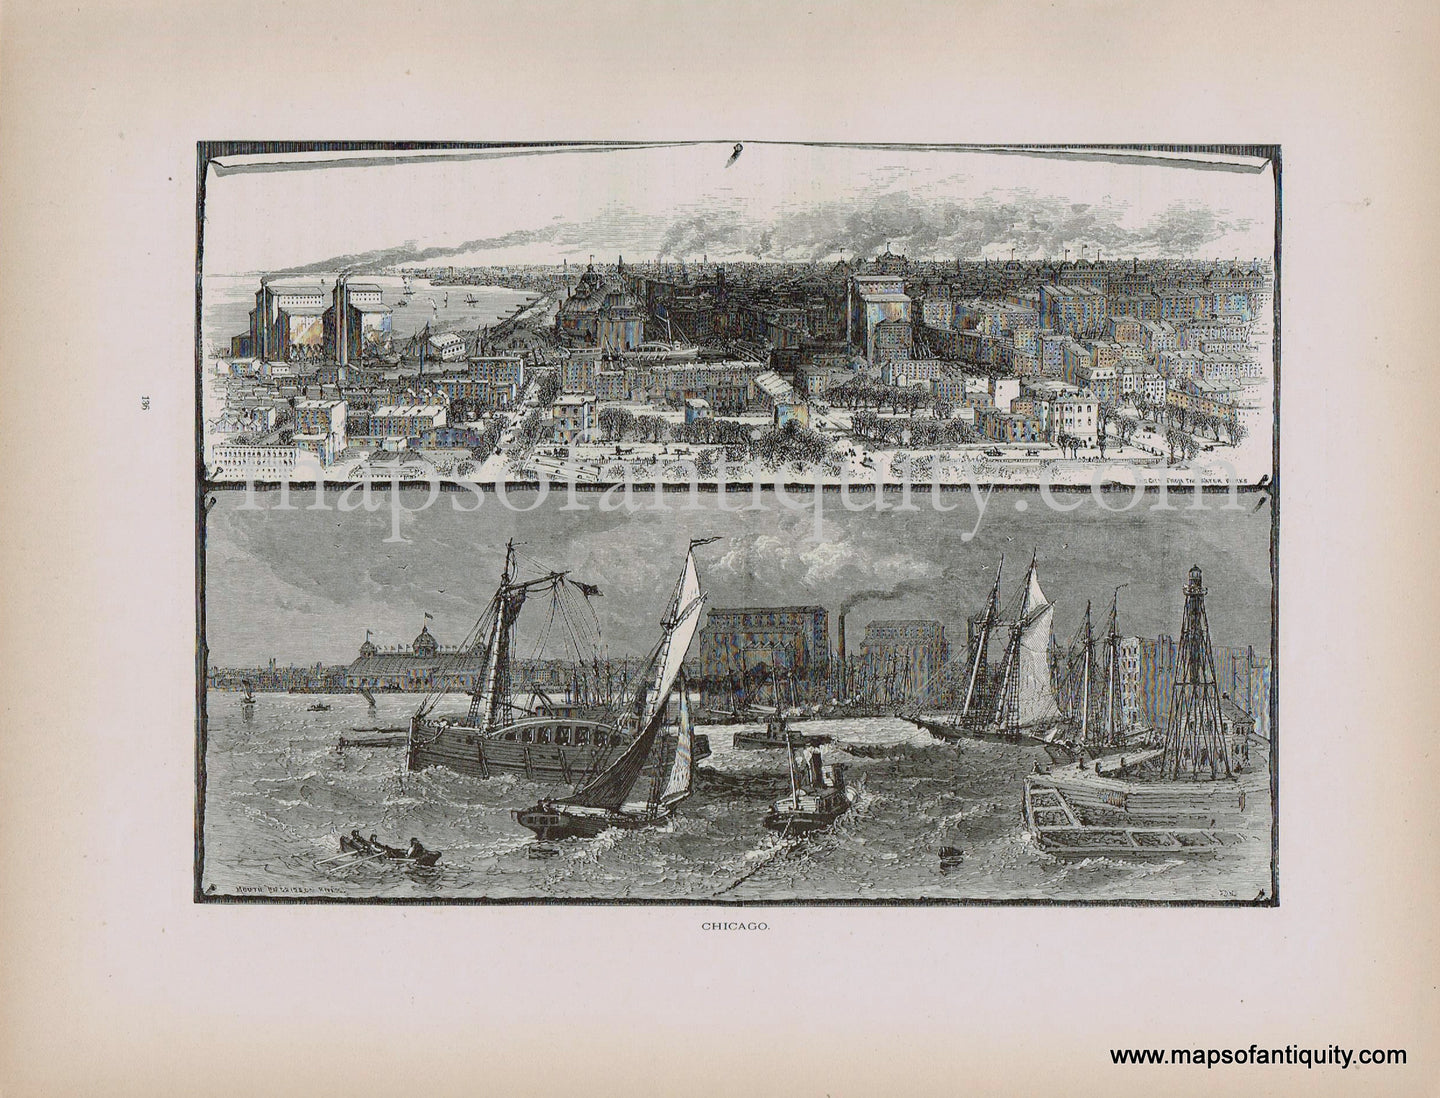 Antique-Print-Prints-Chicago-1872-Picturesque-America-1800s-19th-century-maps-of-Antiquity